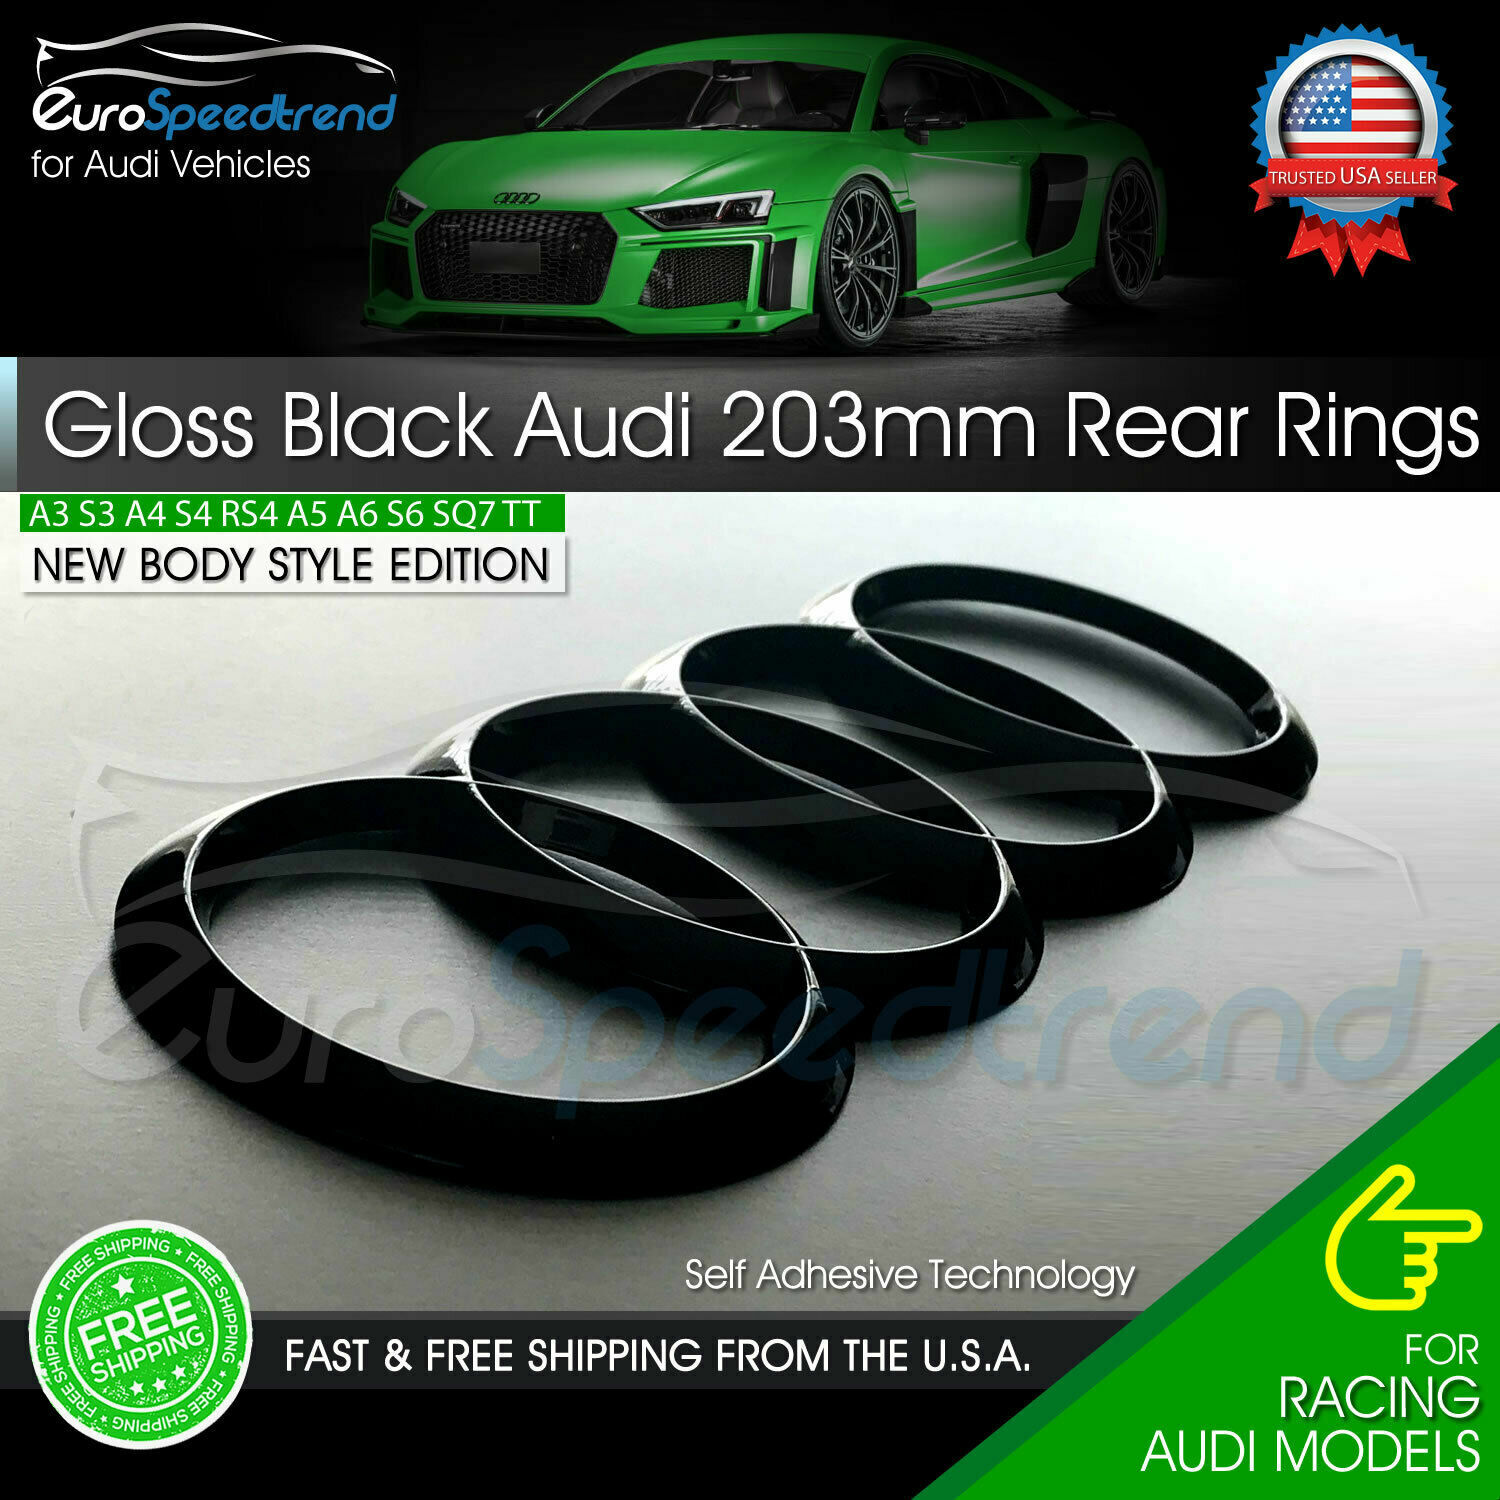 AUDI Rear Rings Gloss Black 203mm Trunk Lid Emblem Badge Logo A4 S4 S6 A6 Q3 Q5